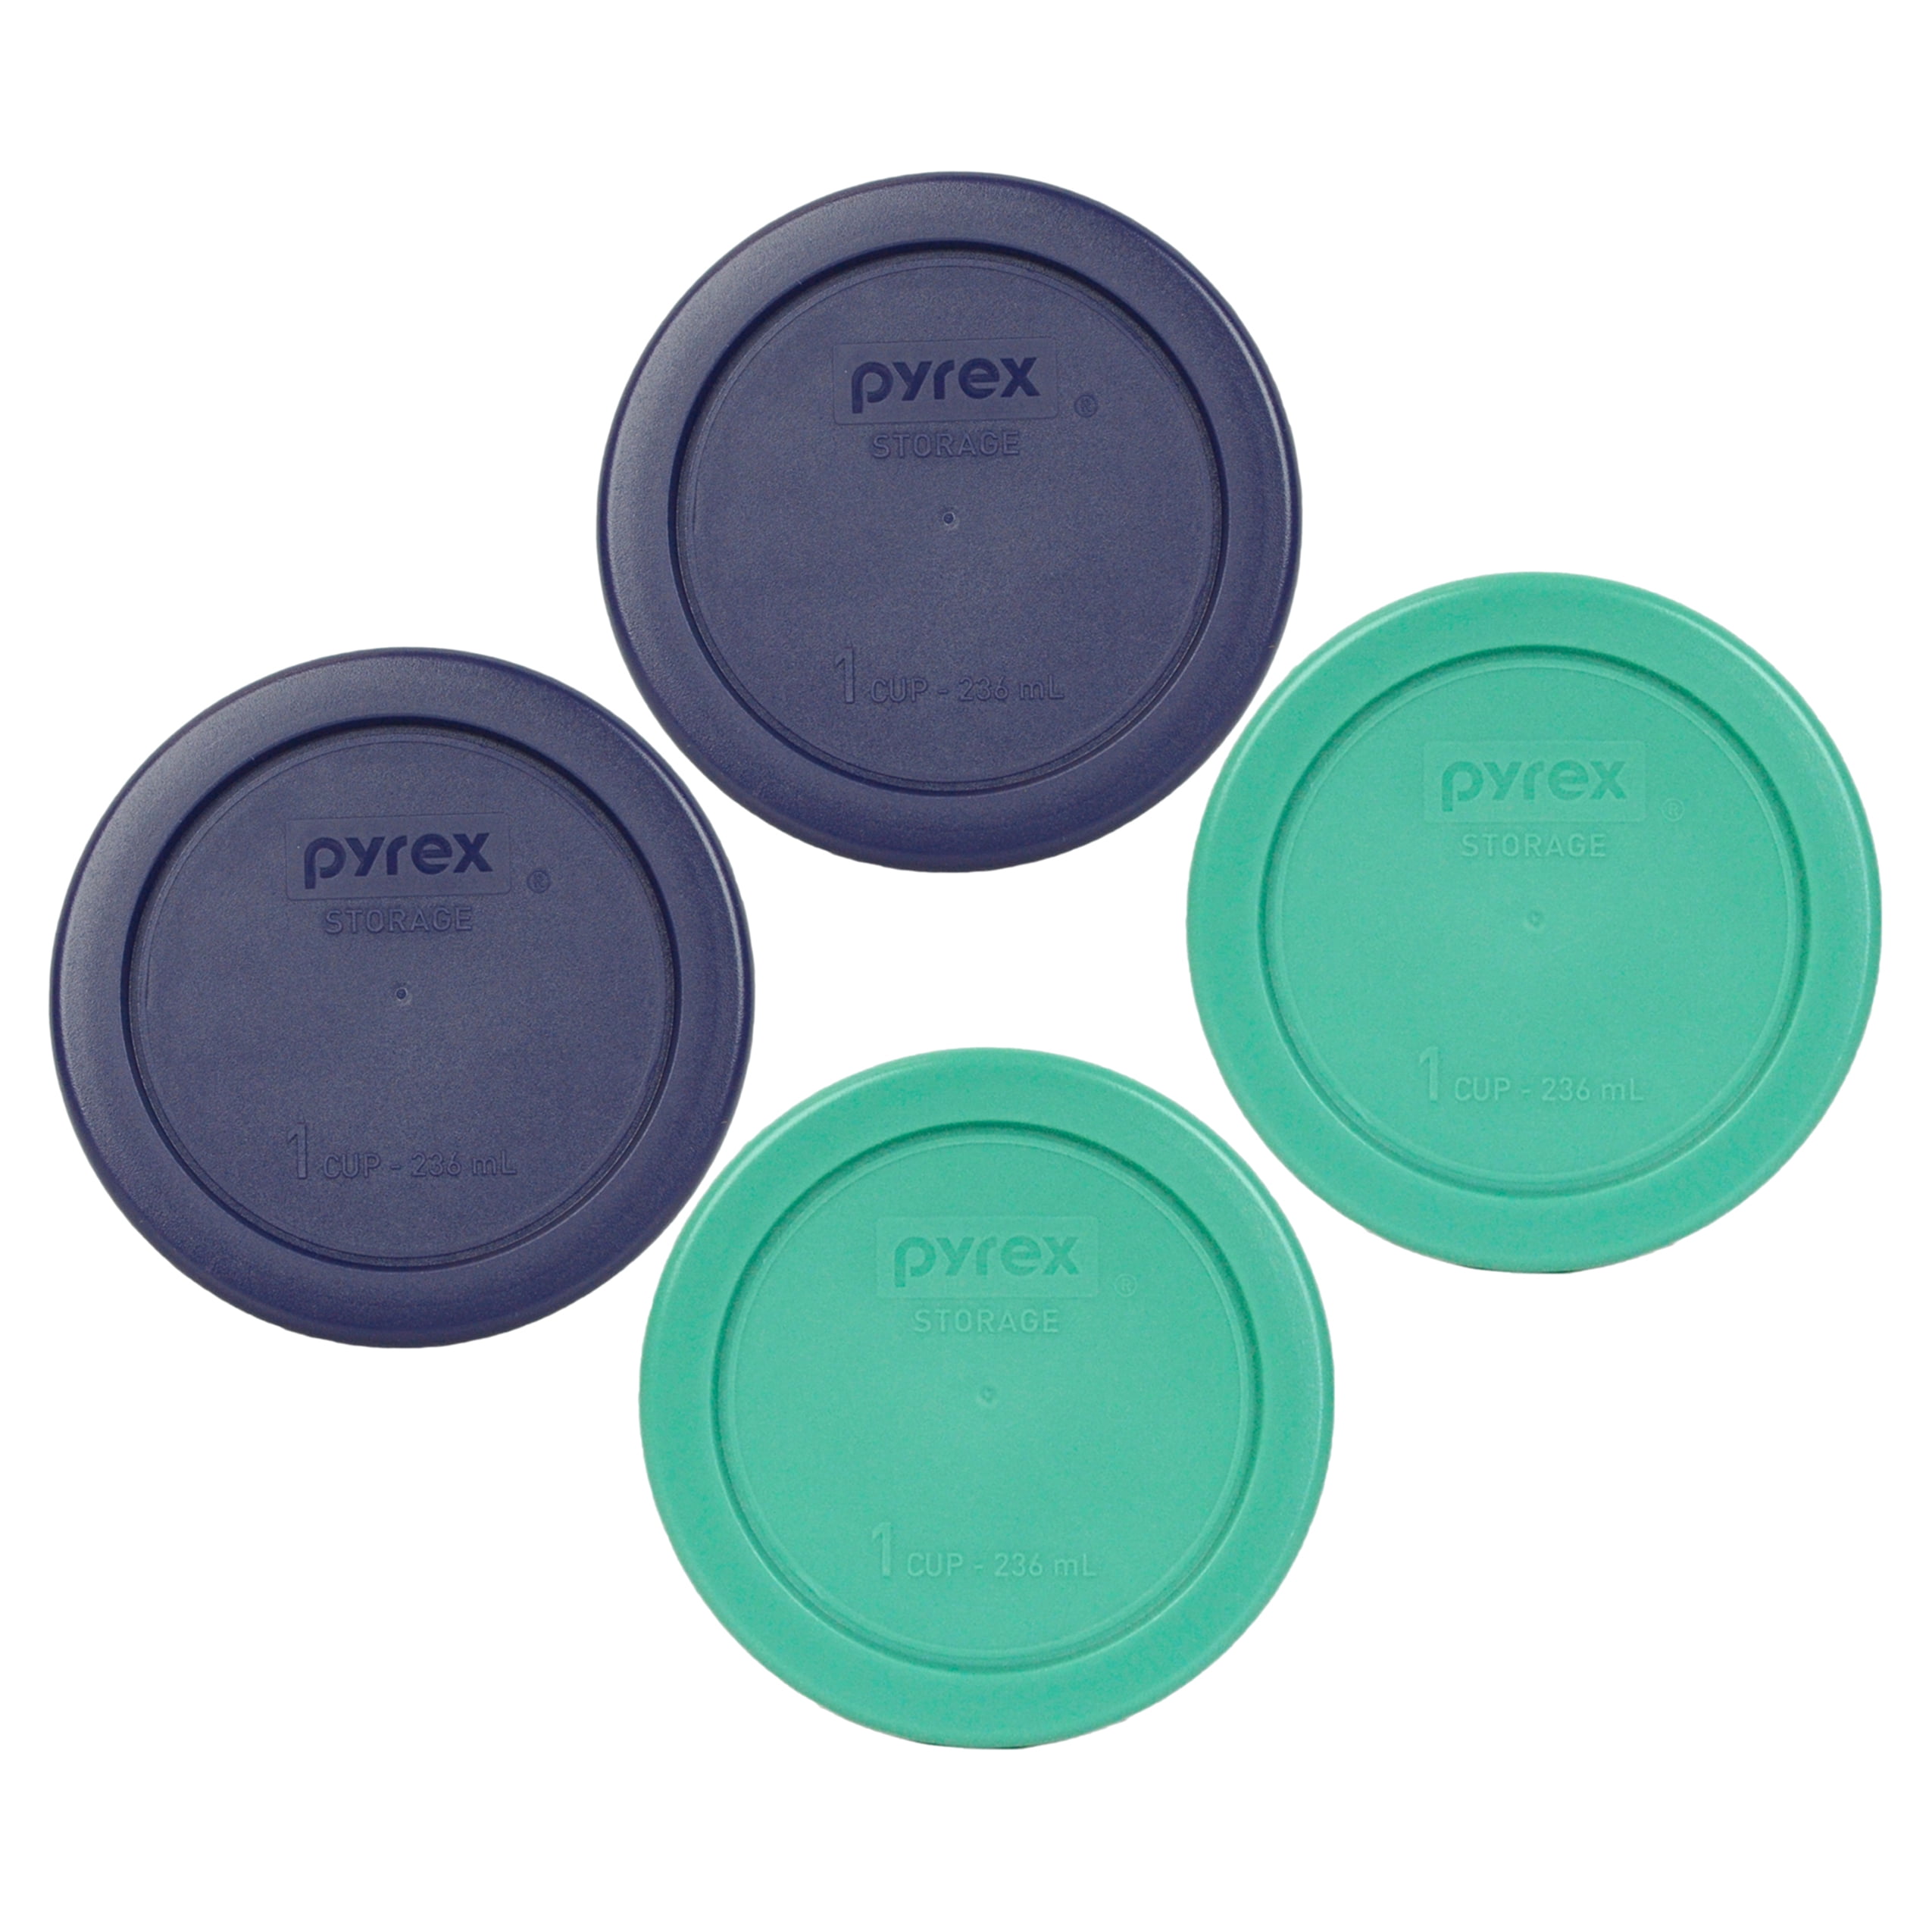 Pyrex 7202 Pc Blue Green Plastic Round Replacement Lids 4 Pack Walmart Com Walmart Com